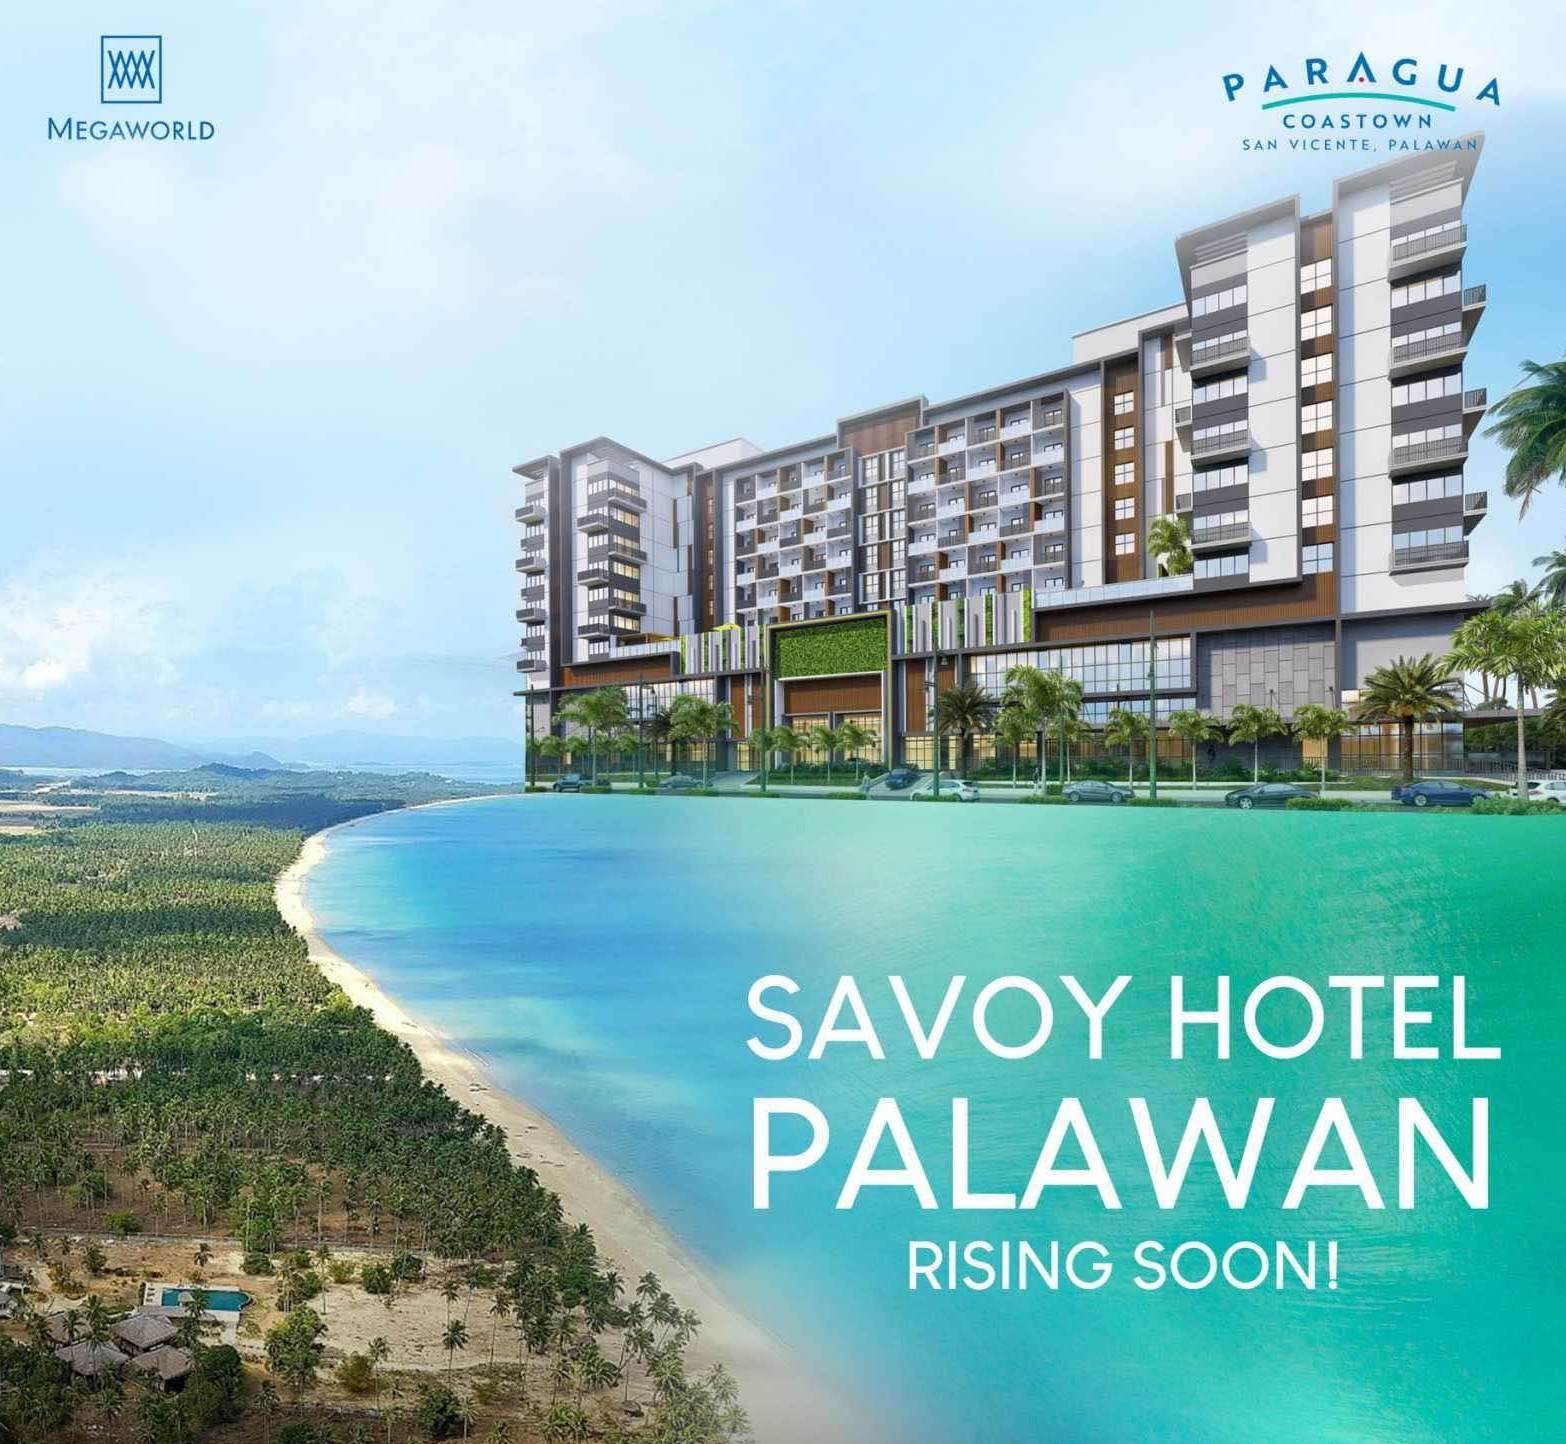 Savoy Hotel Palawan Paragua Coastown